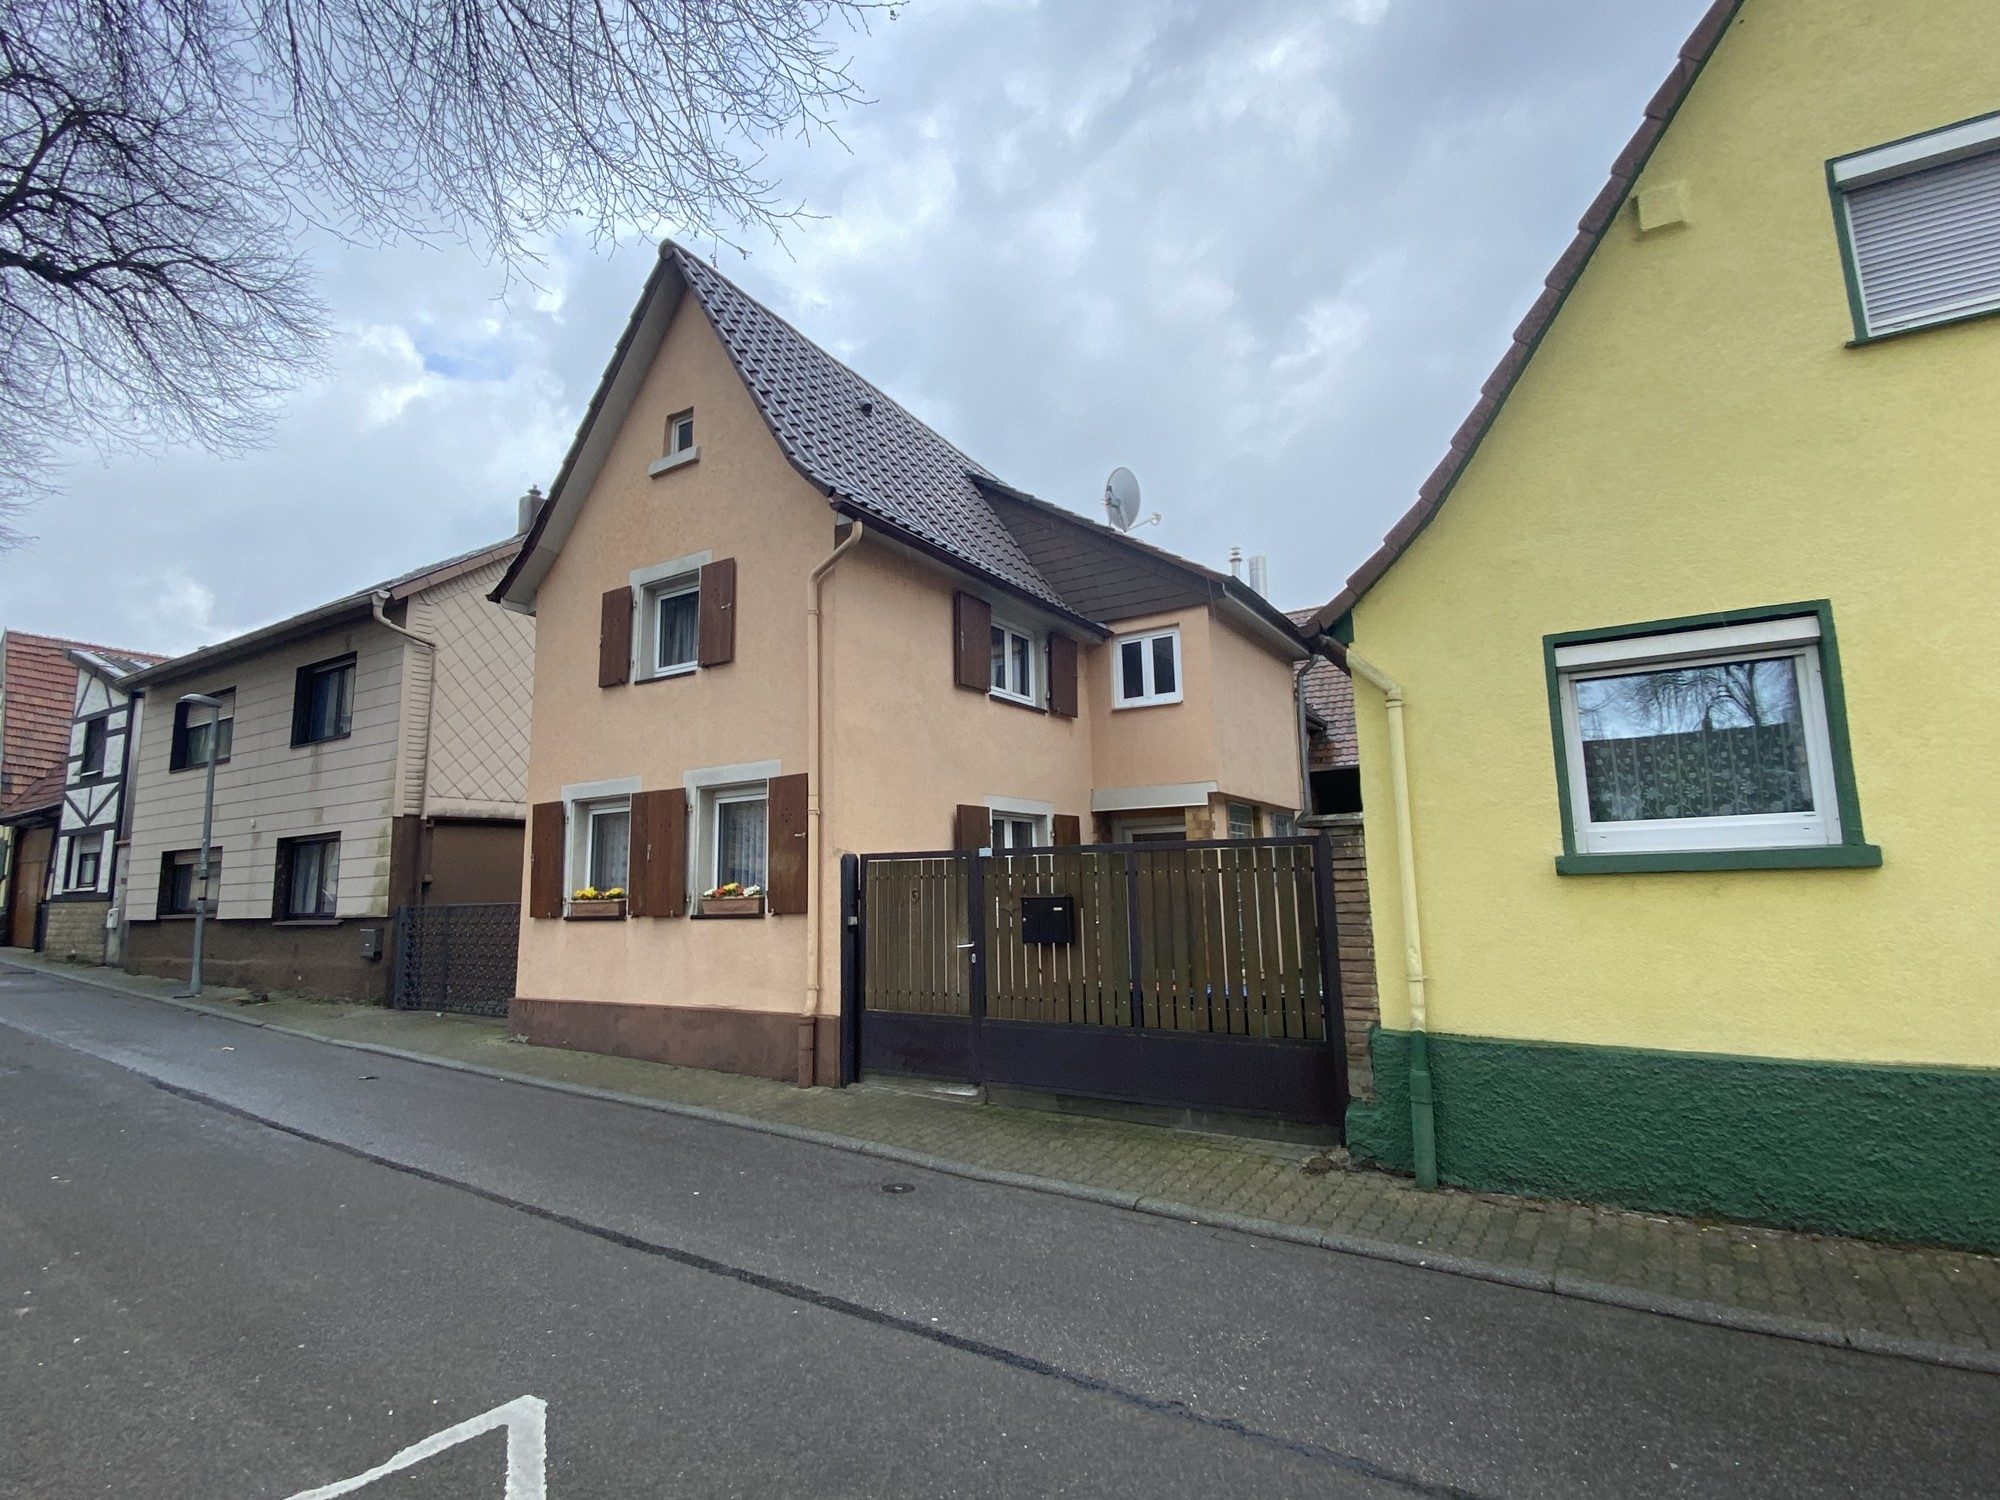 HUST Immobilien GmbH & Co. KG - Immobilienangebot - Karlsruhe / Knielingen - Alle - Charmantes Wohnhaus mit Innenhof und Scheune in Karlsruhe-Knielingen!